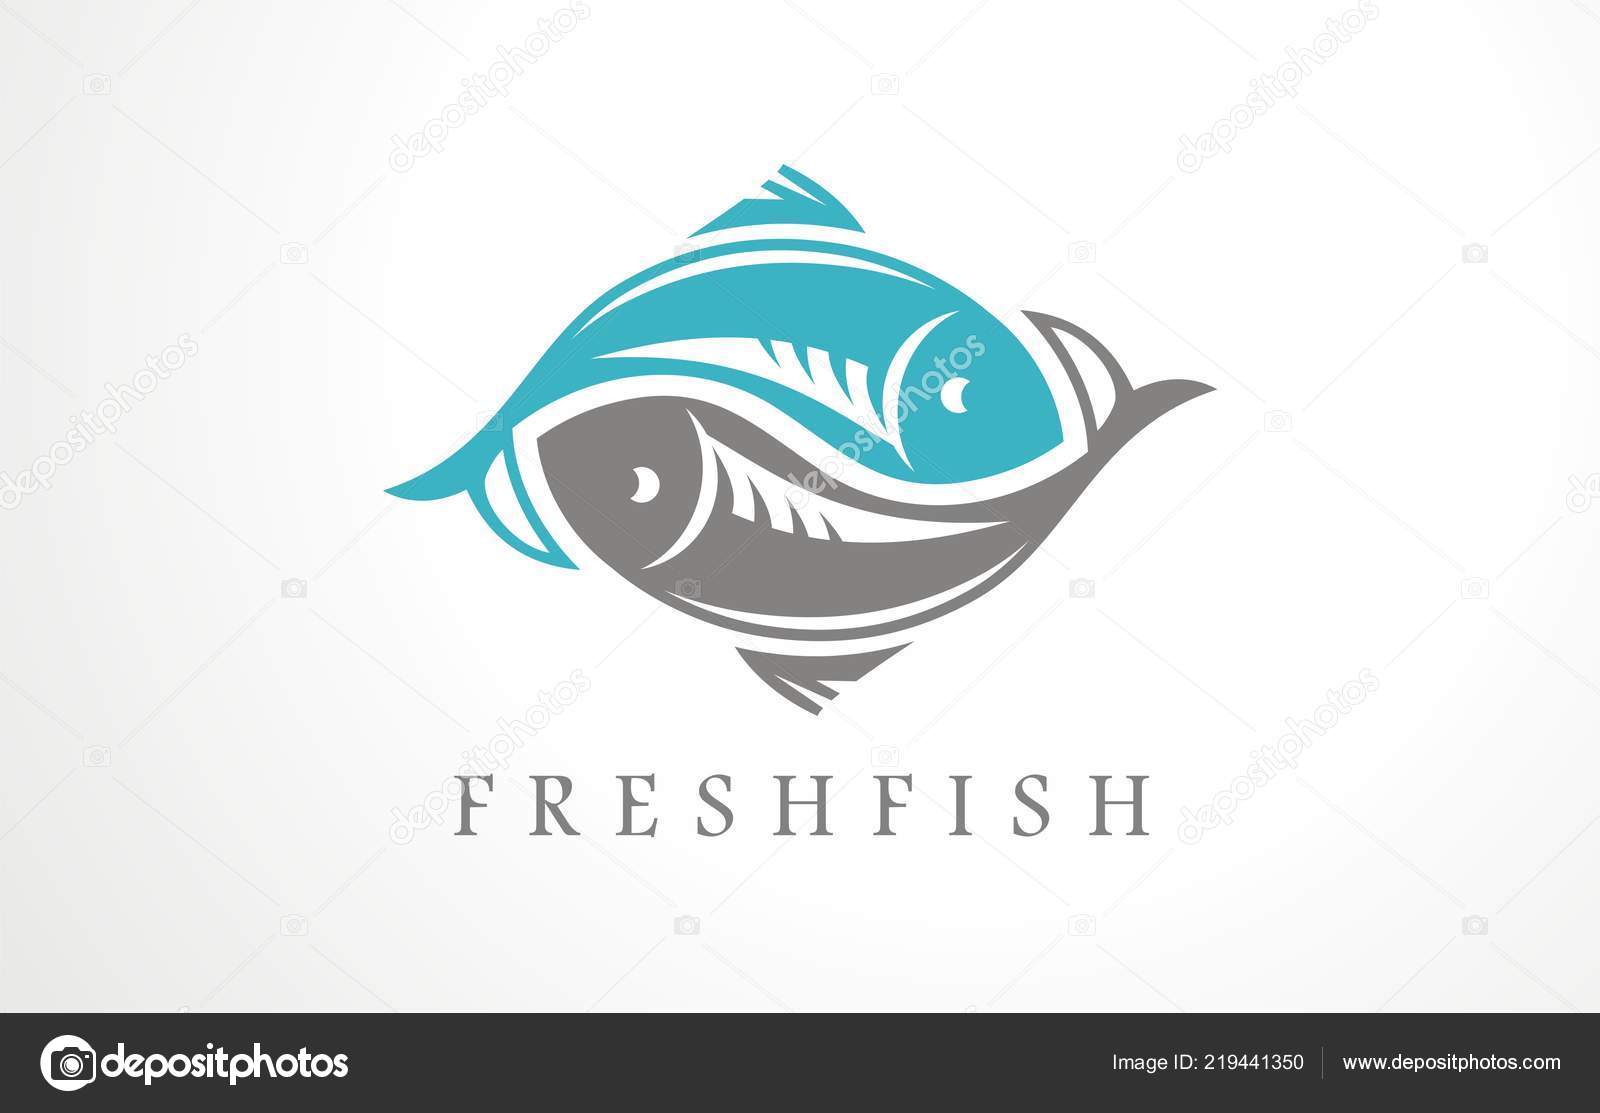 Fresh Fish Logo Design Idea Fish Merchant Seafood Restaurant